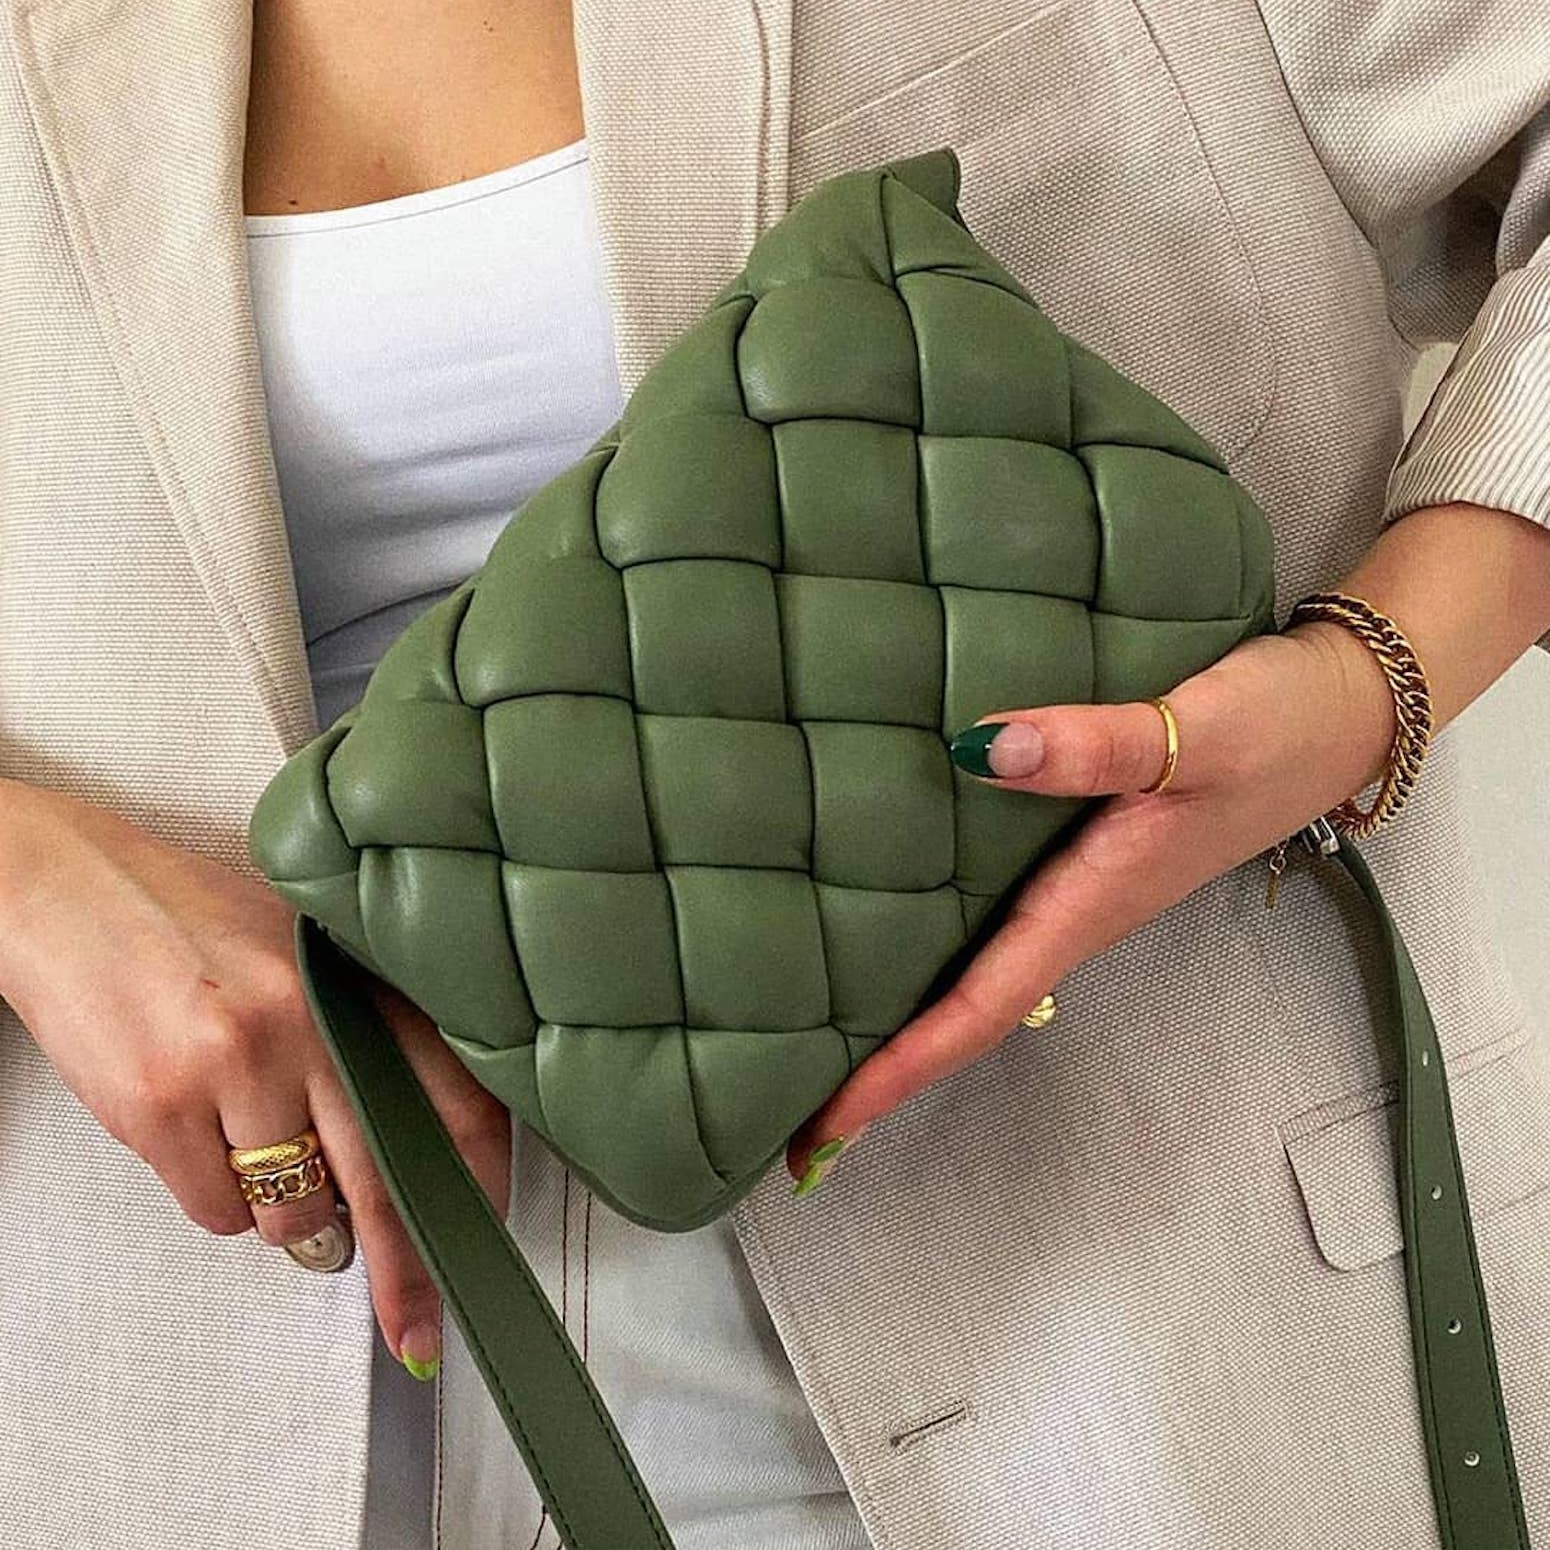 Fashion Mini Flap Bag & Purses - Dark Green Croc Embossed - JW PEI